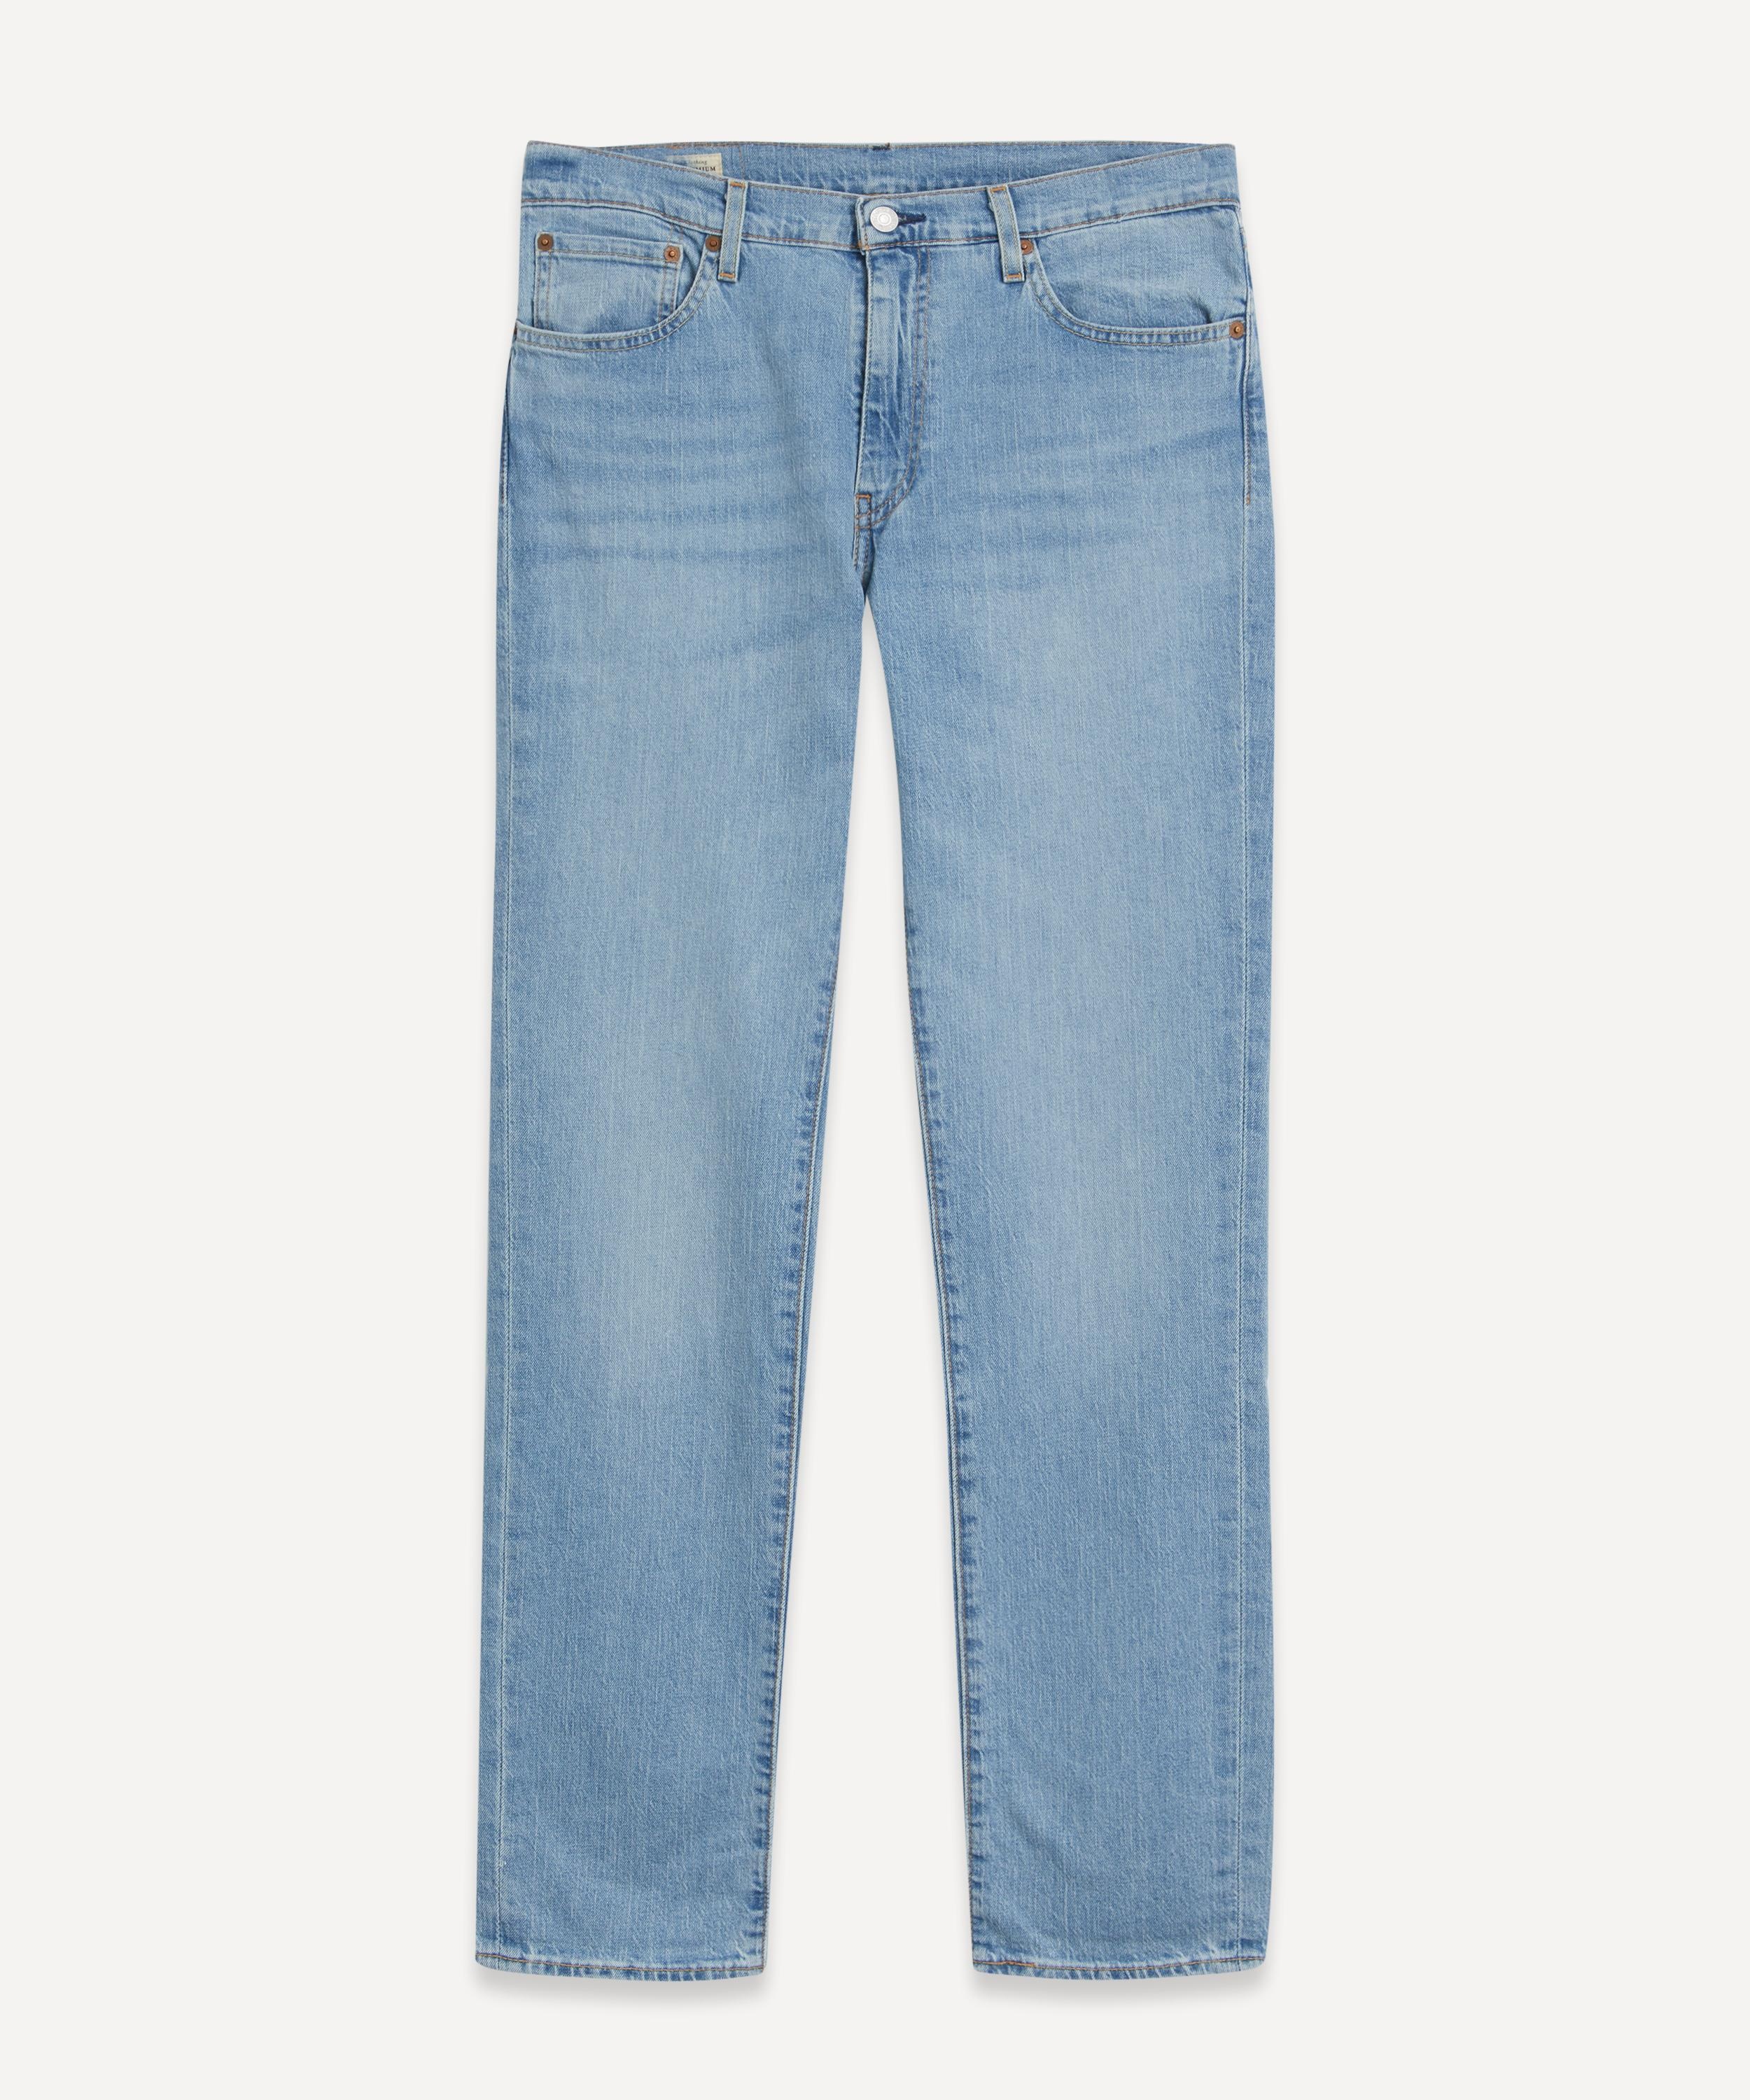 511 Slim Tabor Well Worn Jeans - 1